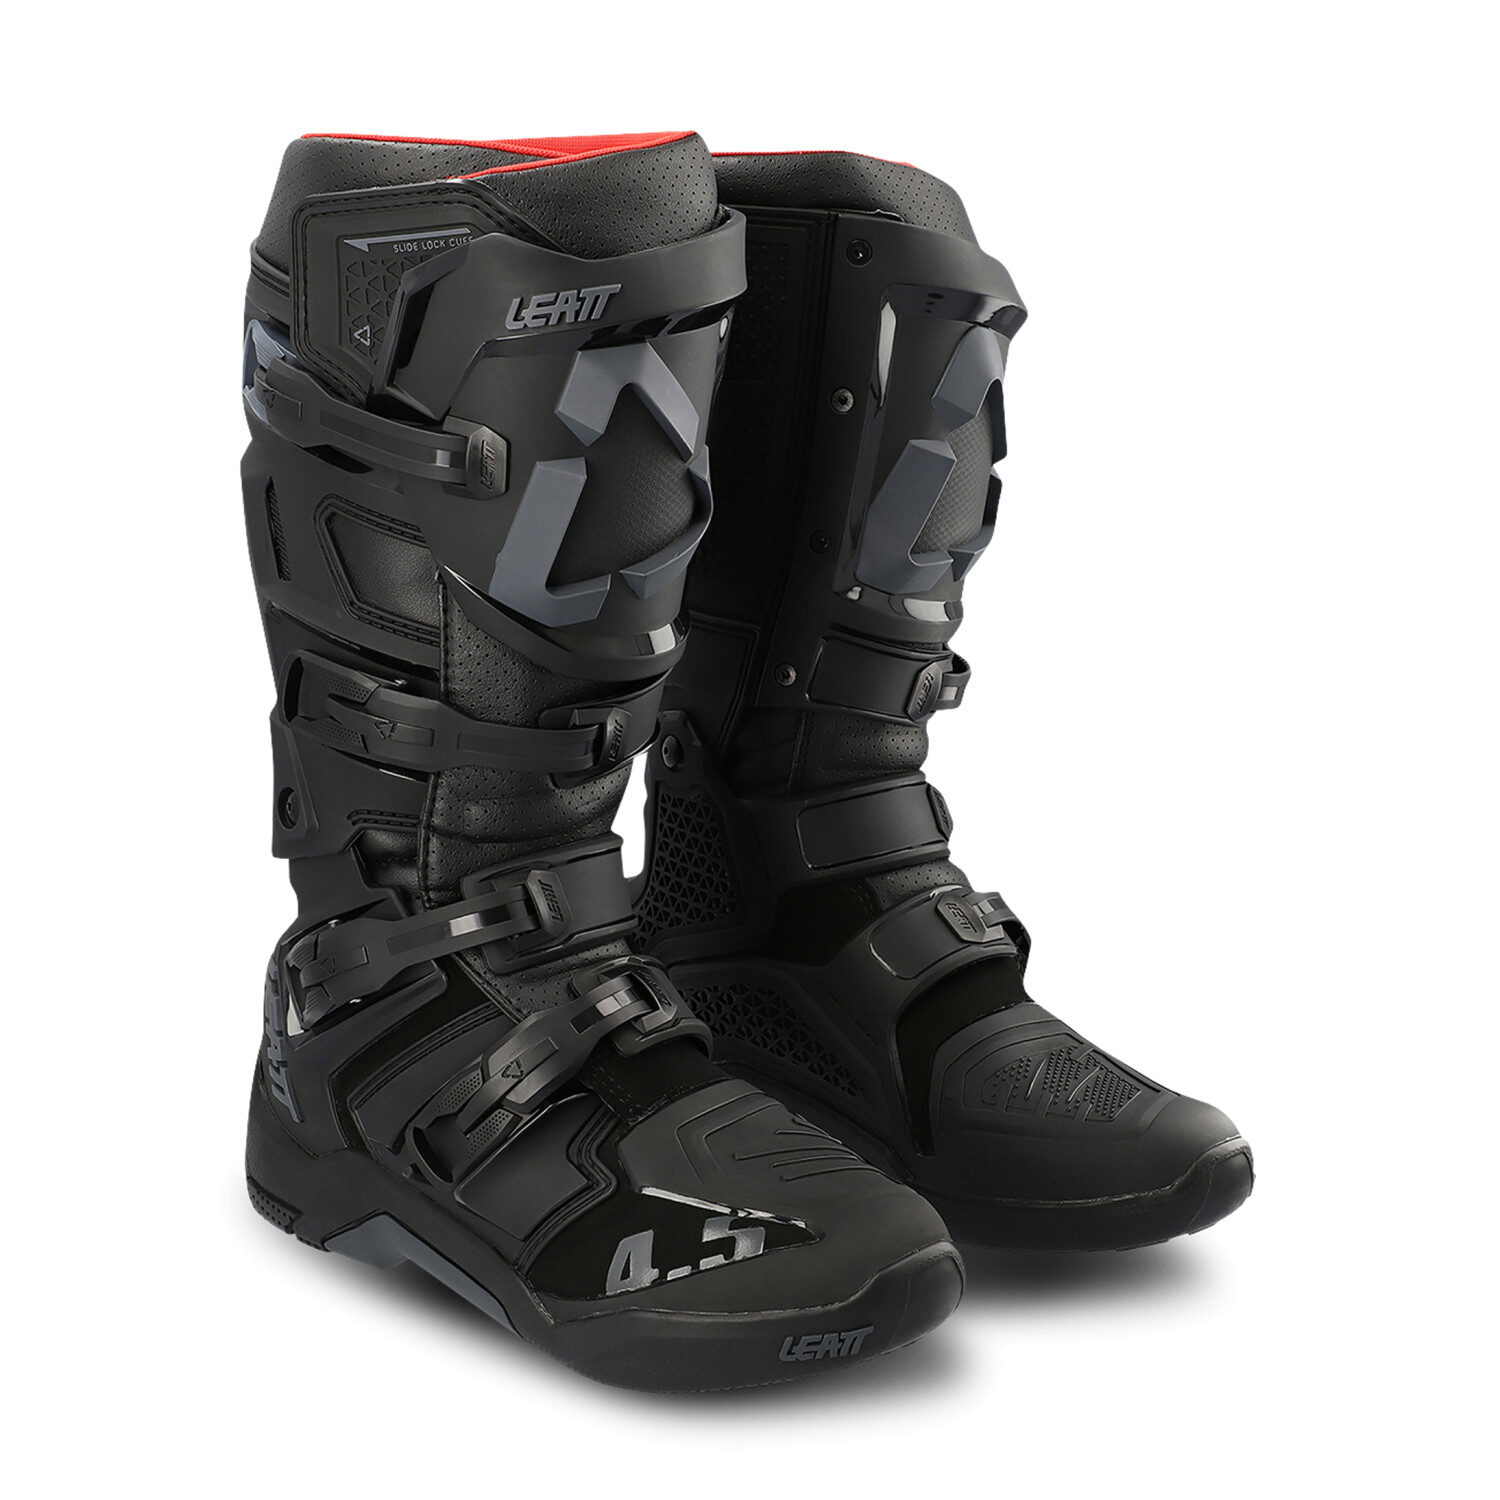 Buy Leatt Boot 4.5 Black from £198.93 (Today) – Best Deals on idealo.co.uk